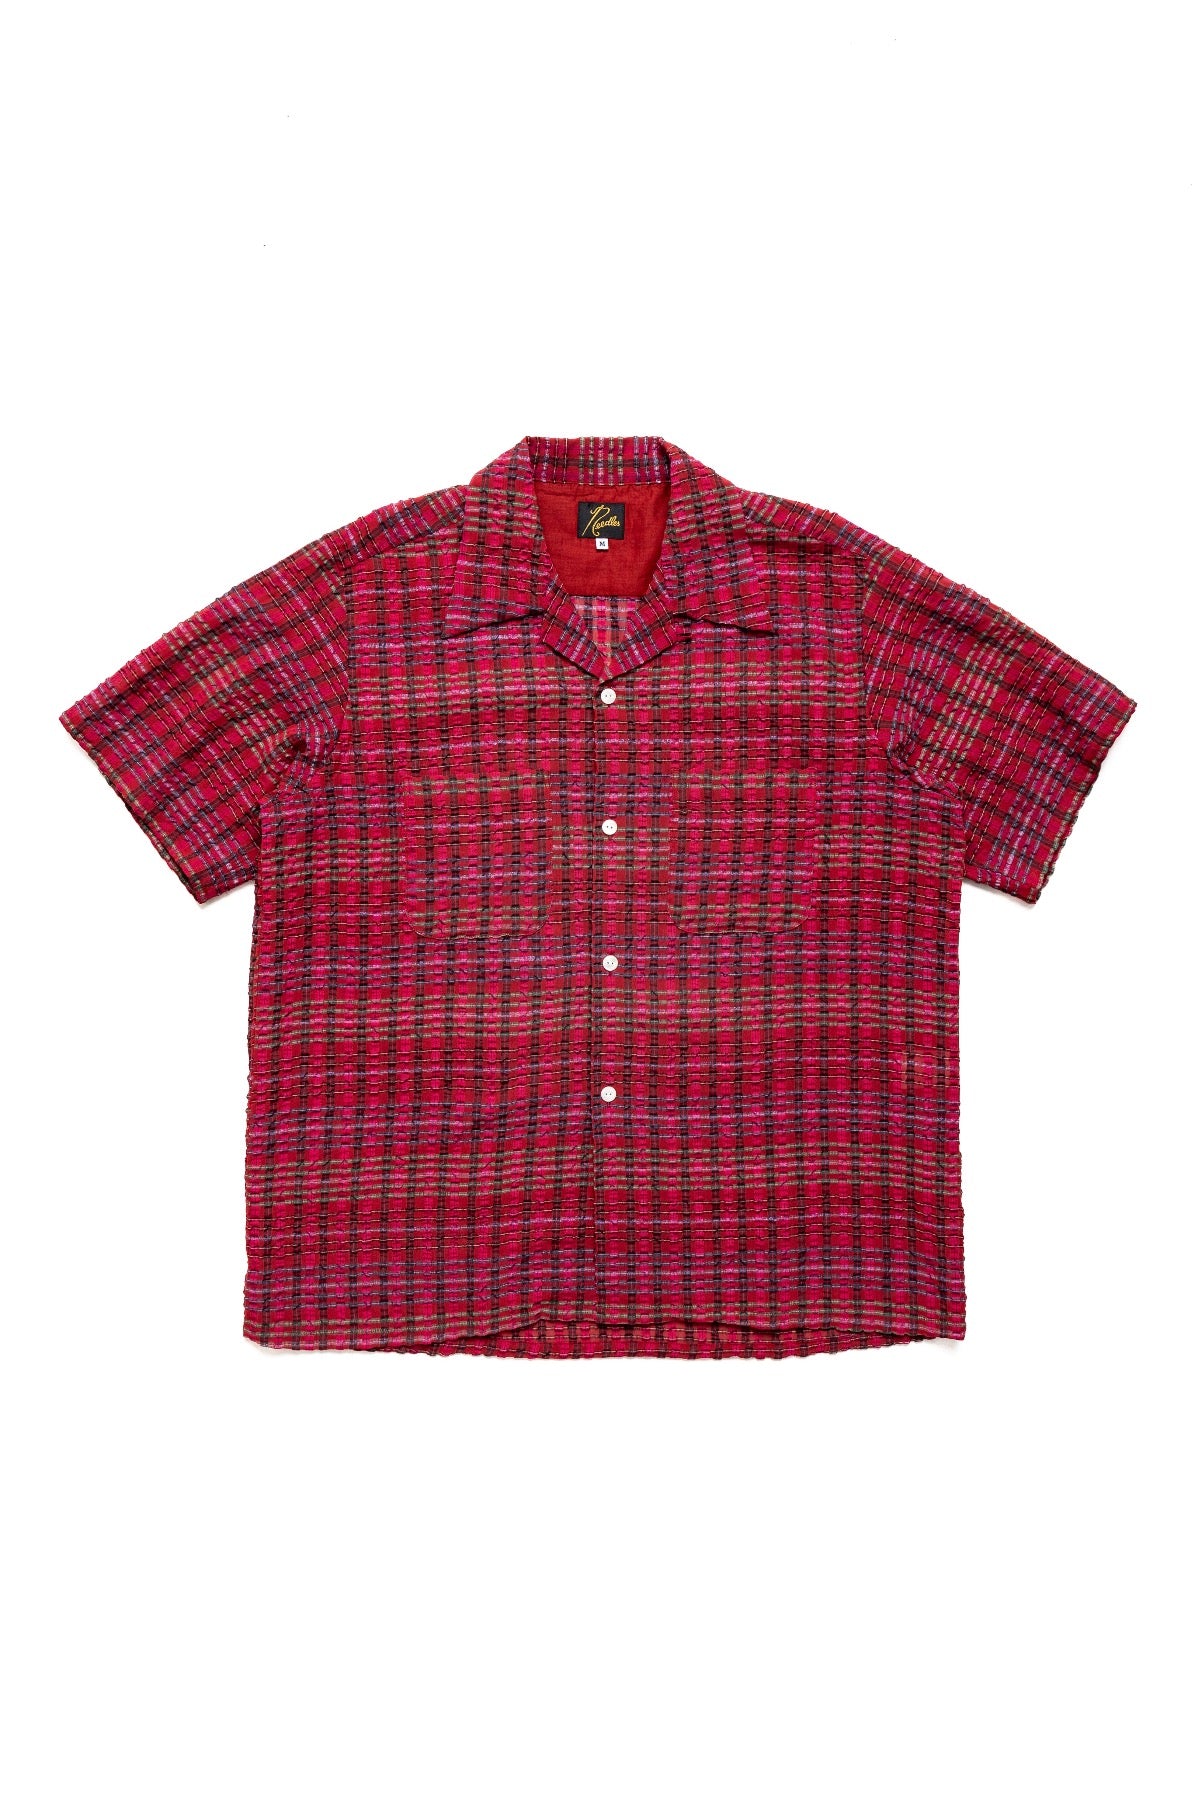 S/S One-Up Shirt PE/R Chiffon Sucker Plaid - Red